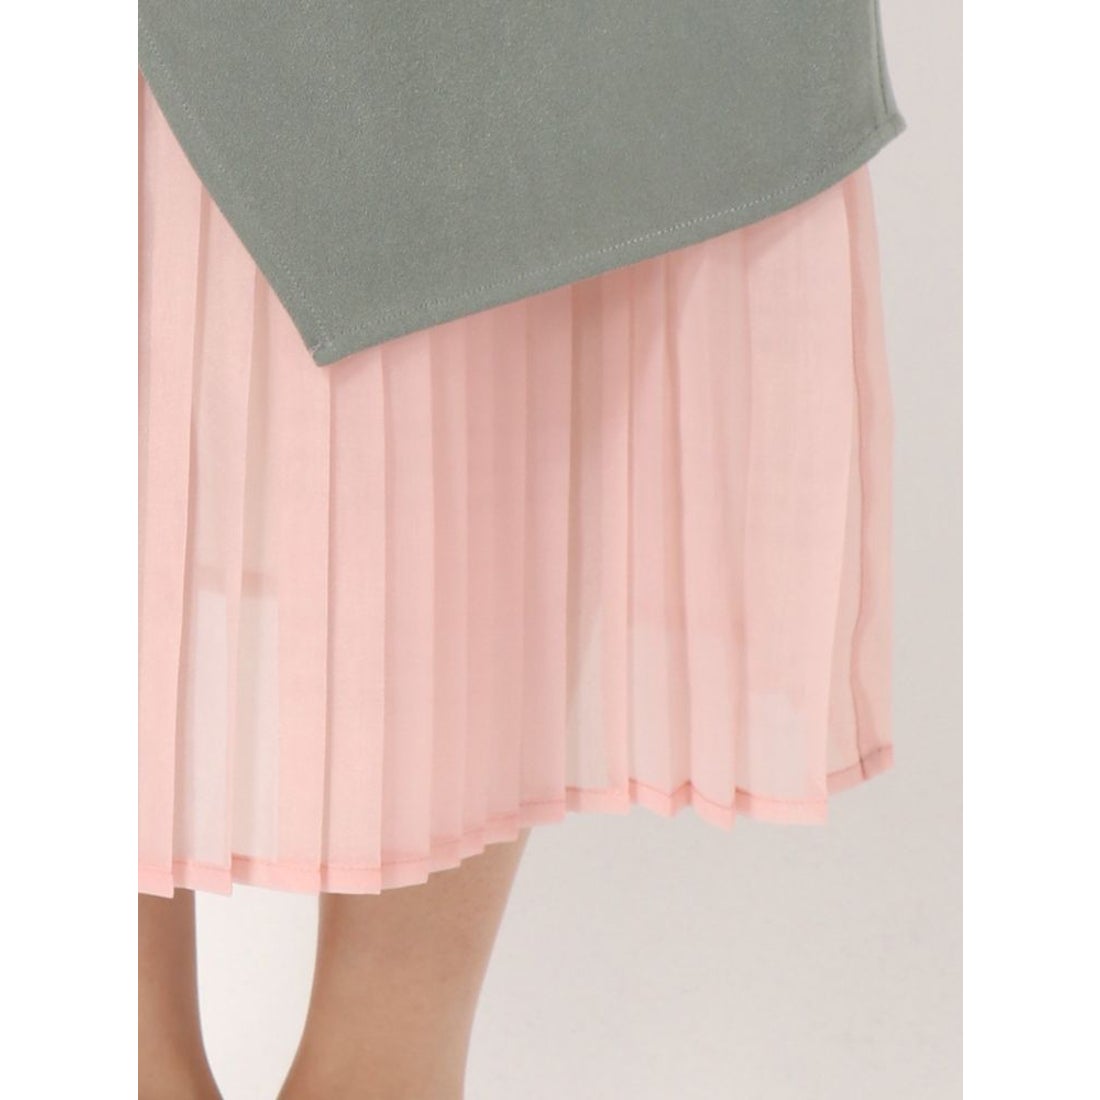 Merry Jenny Re 5分咲きチューリップスカート ピンク ファッション通販 Fashion Walker In Locondo